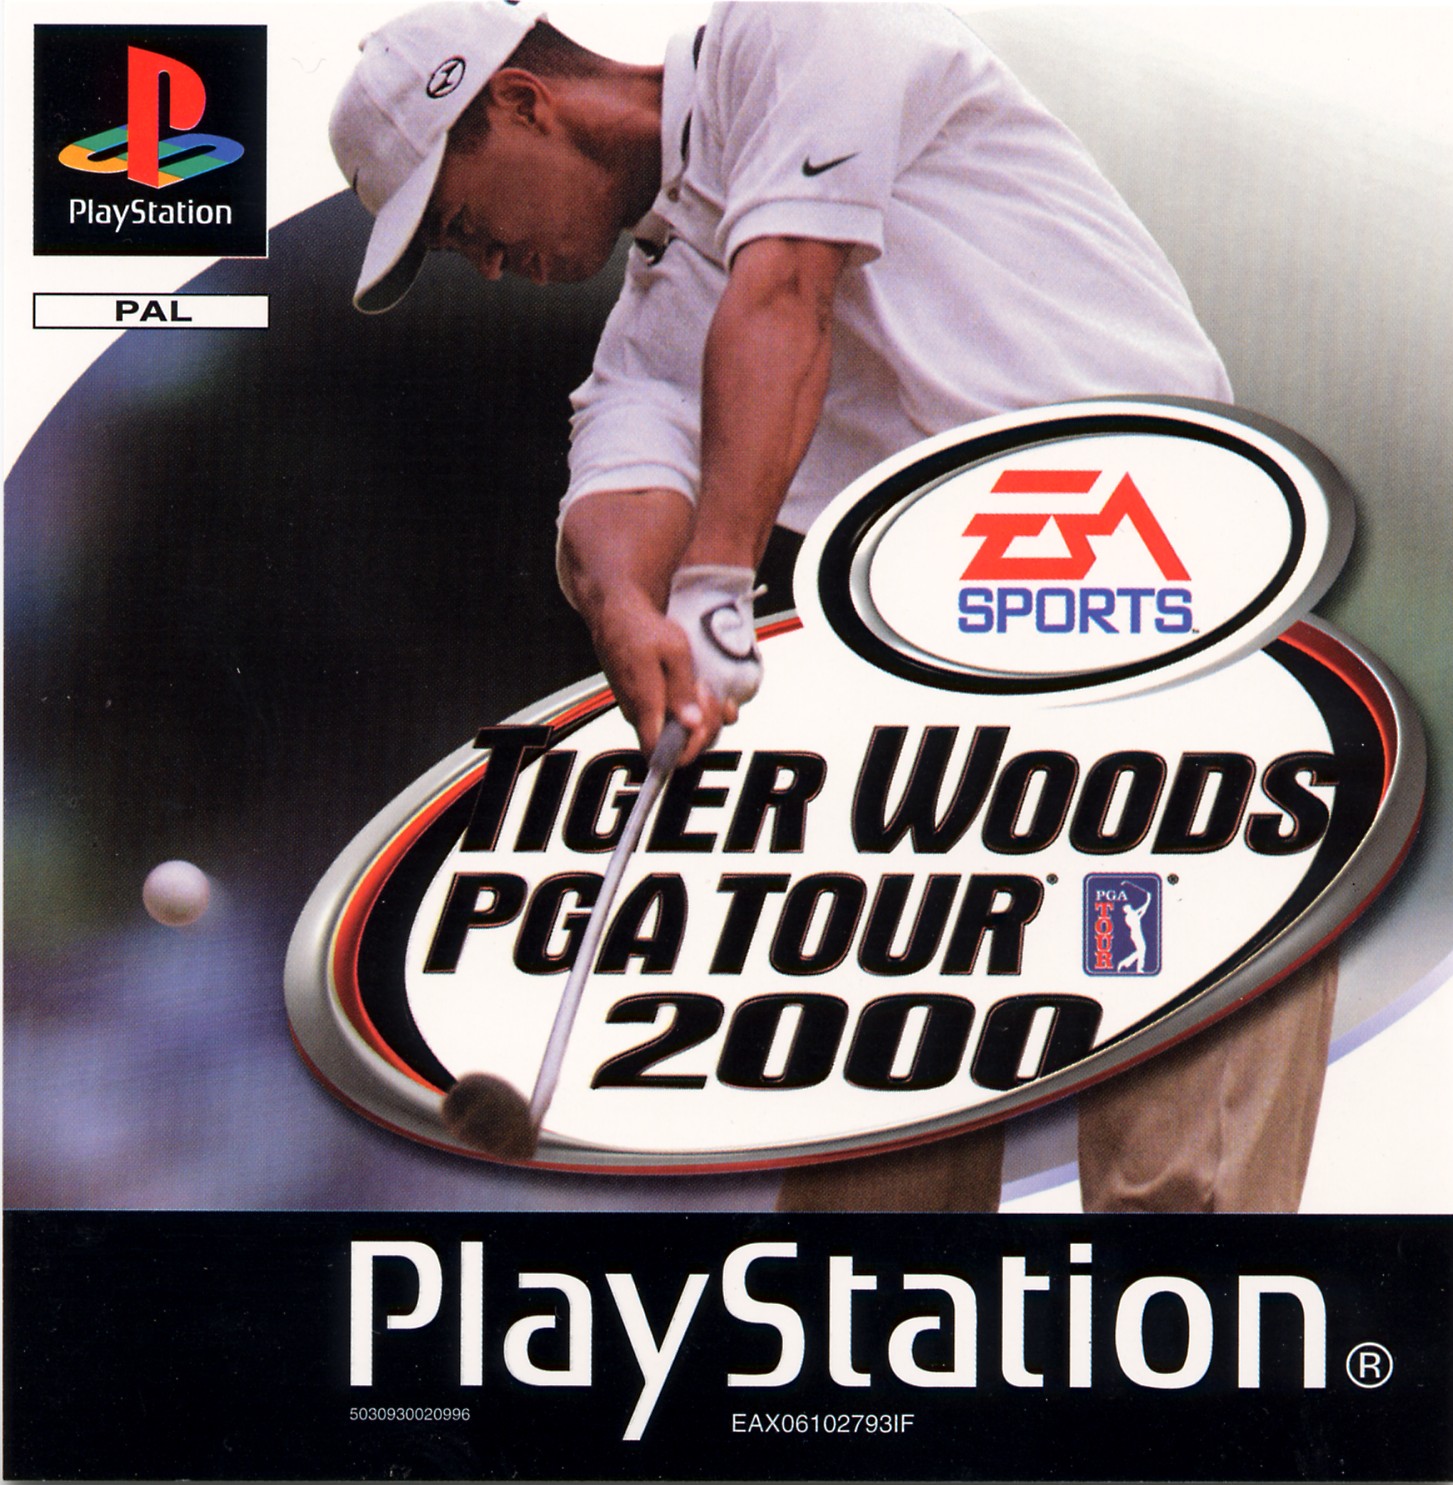 Tiger Woods Pga Tour 2000 Pal Front